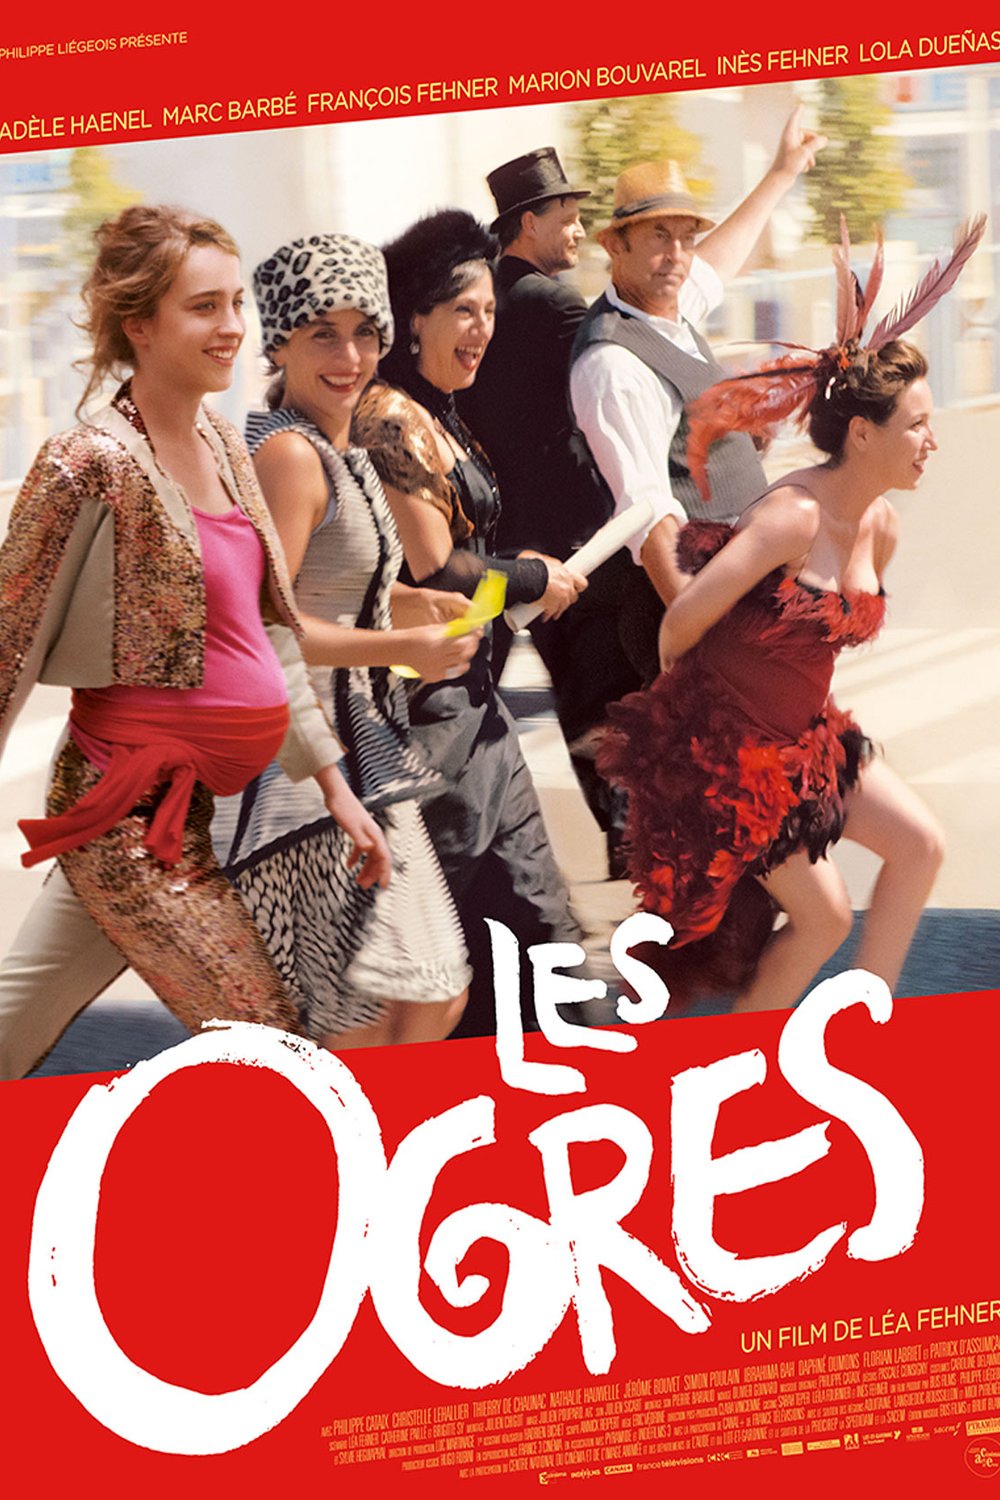 Poster of the movie Les Ogres v.f.